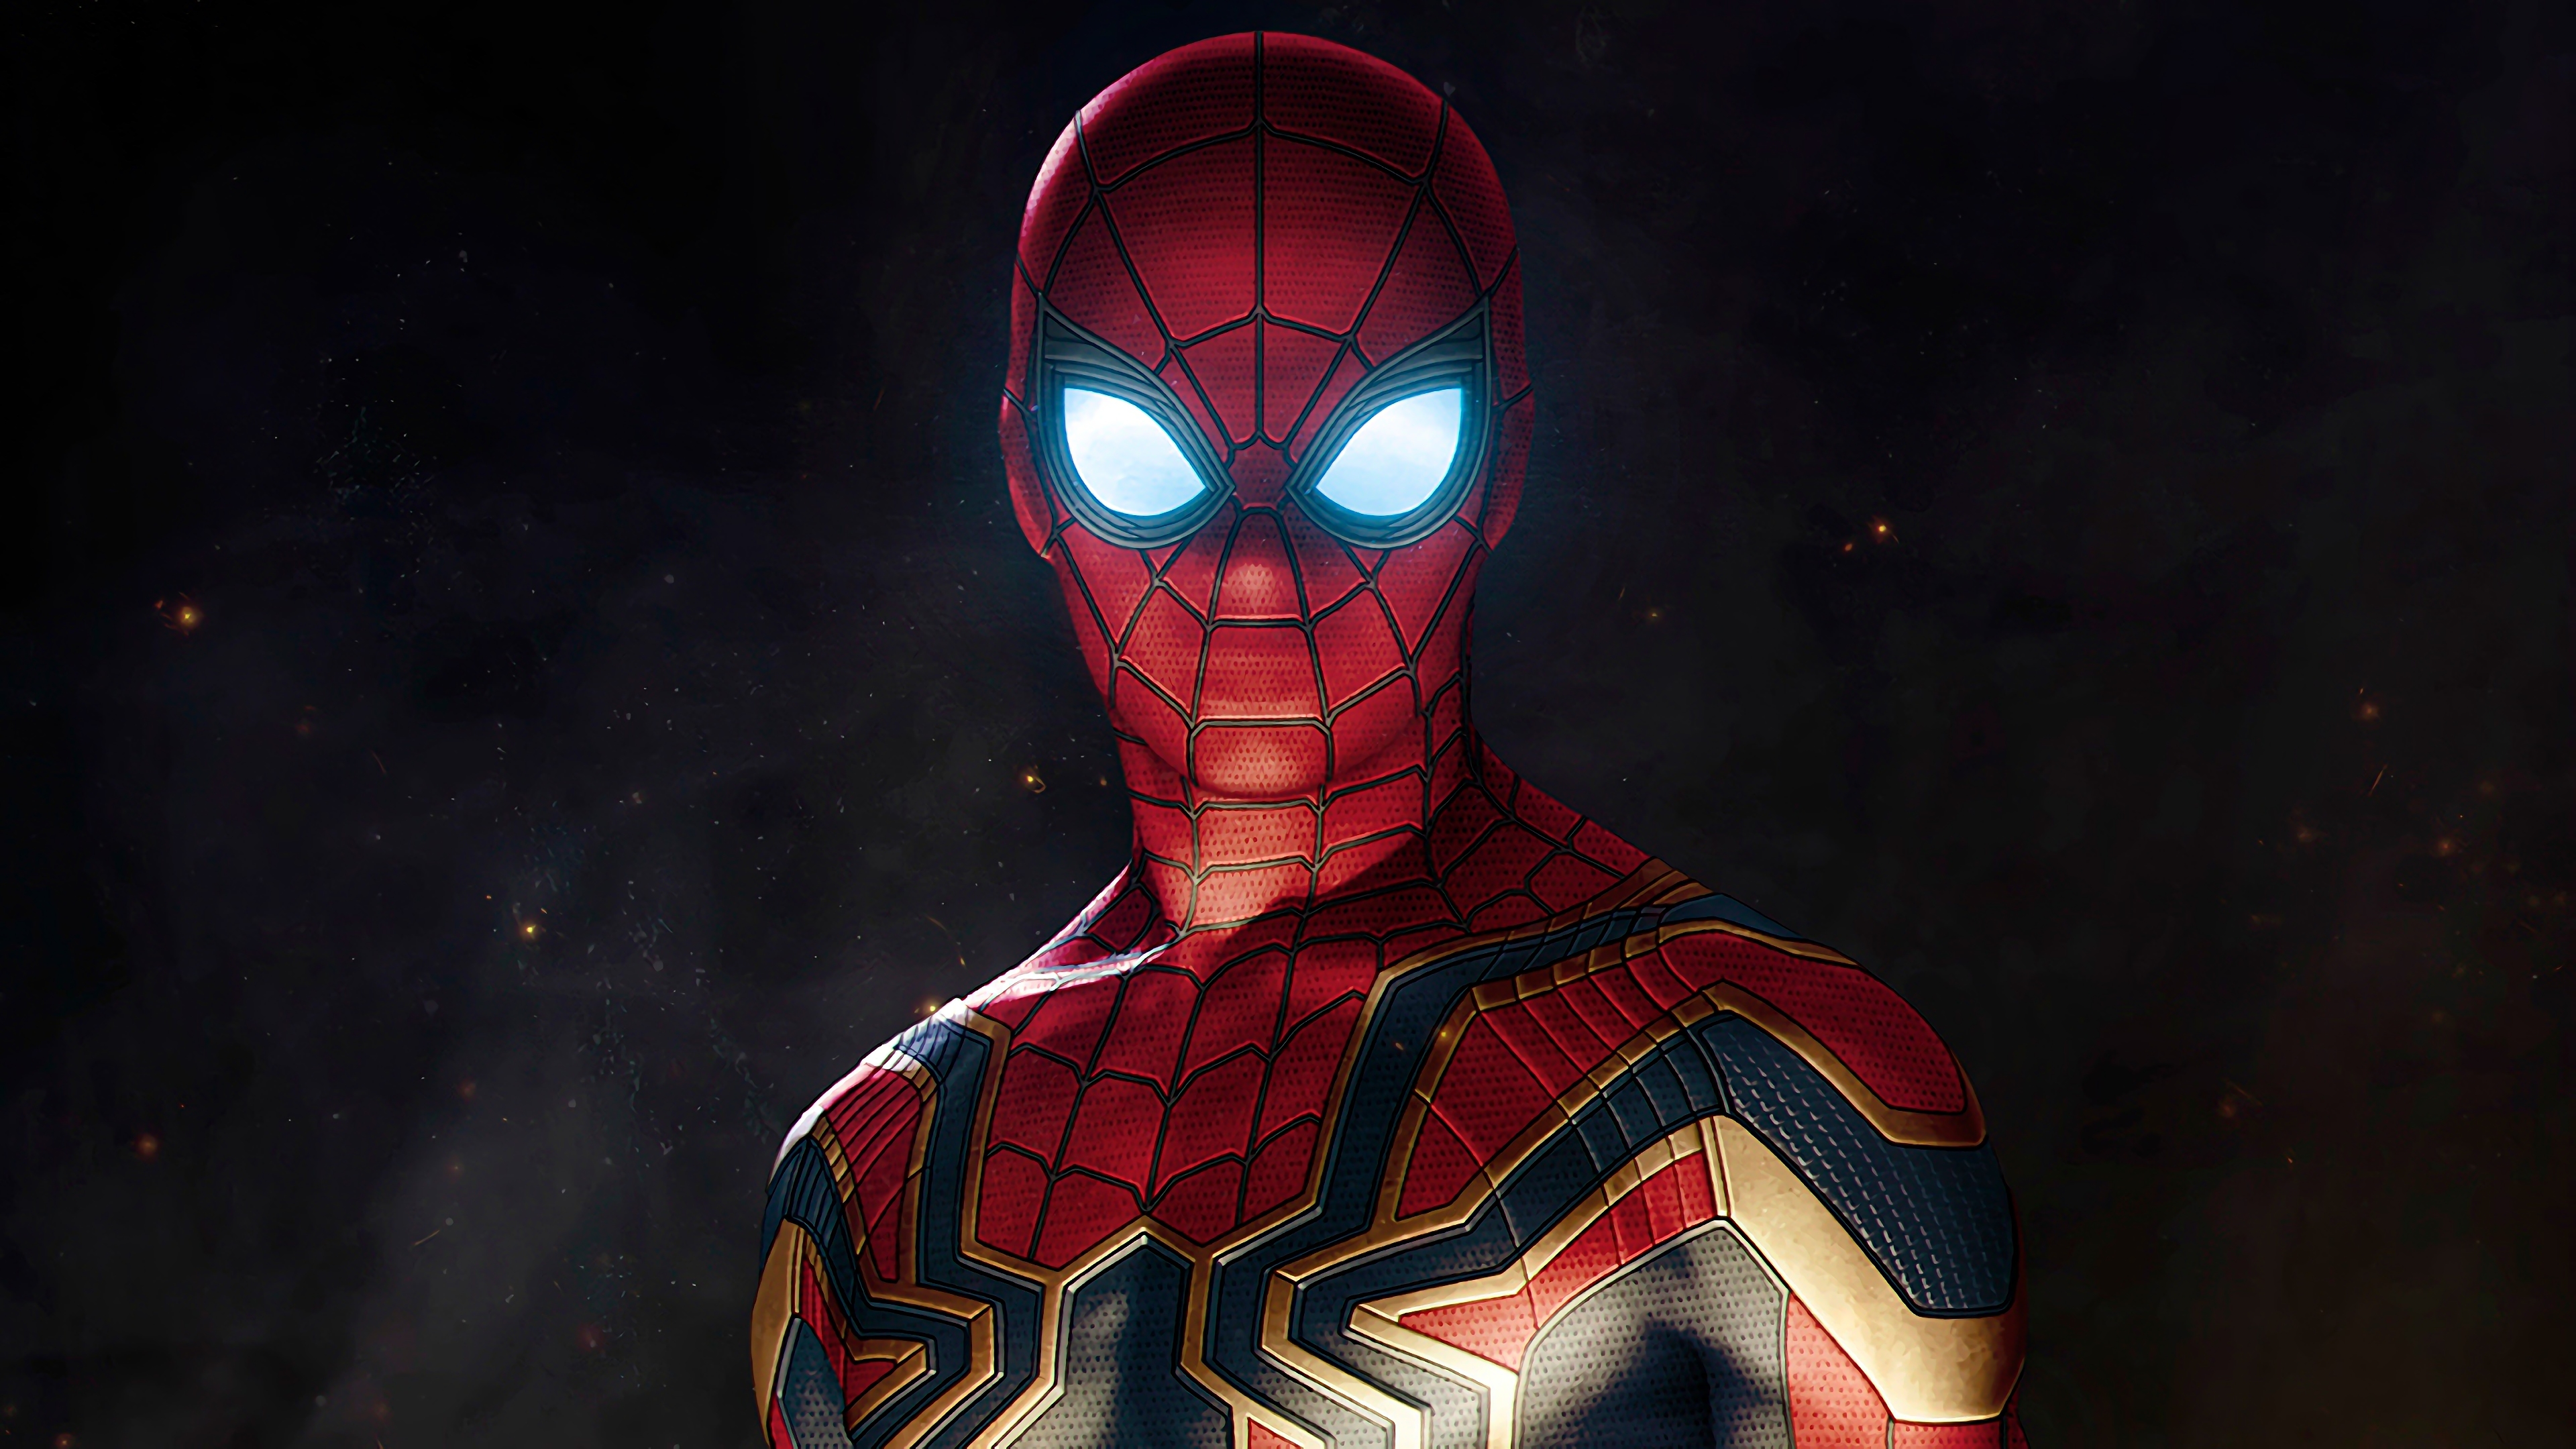 Spider Man in Avengers Infinity War 4K